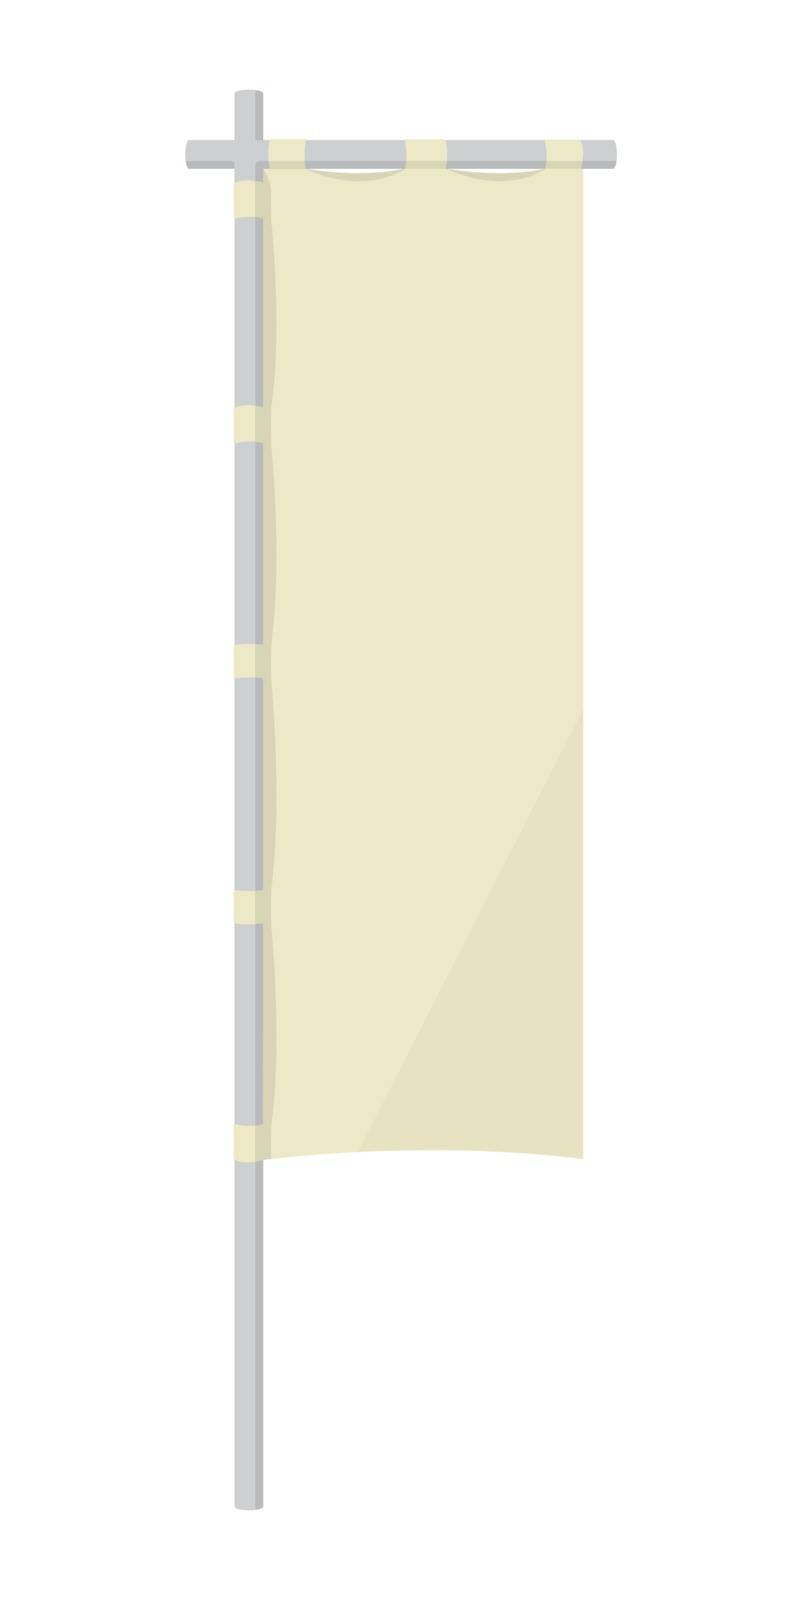 Japanese vertical flag (banner) illustration by barks